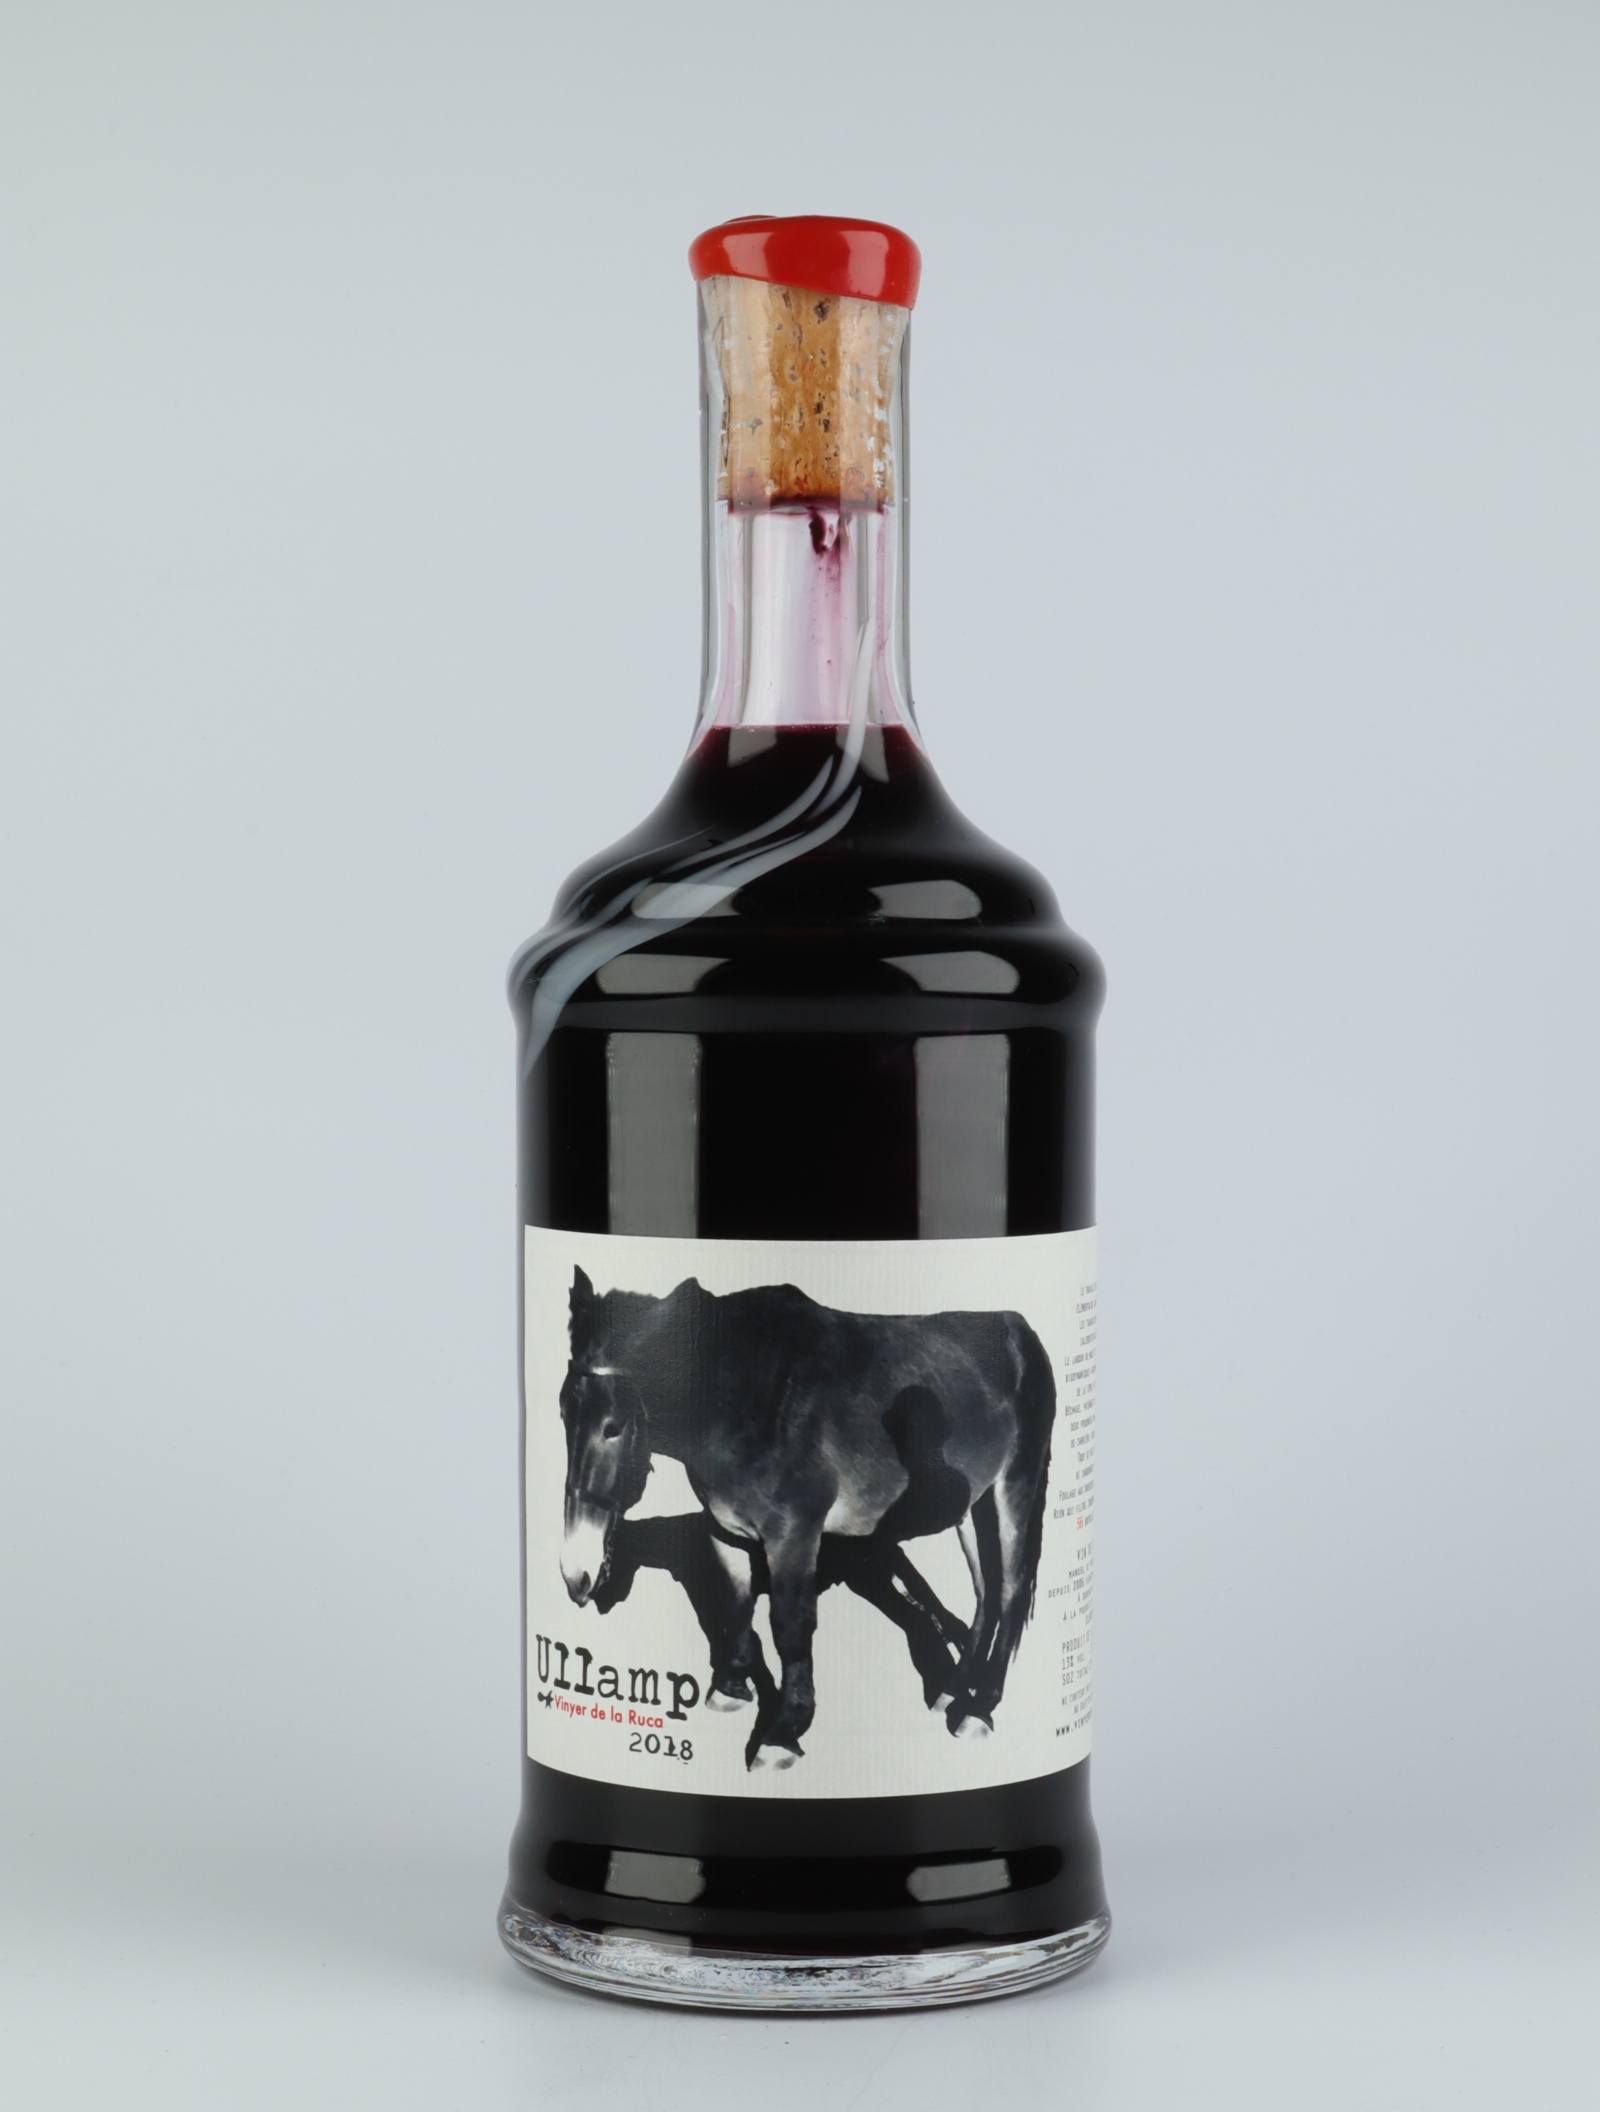 A bottle 2018 Ullamp Red wine from Vinyer de la Ruca, Rousillon in France